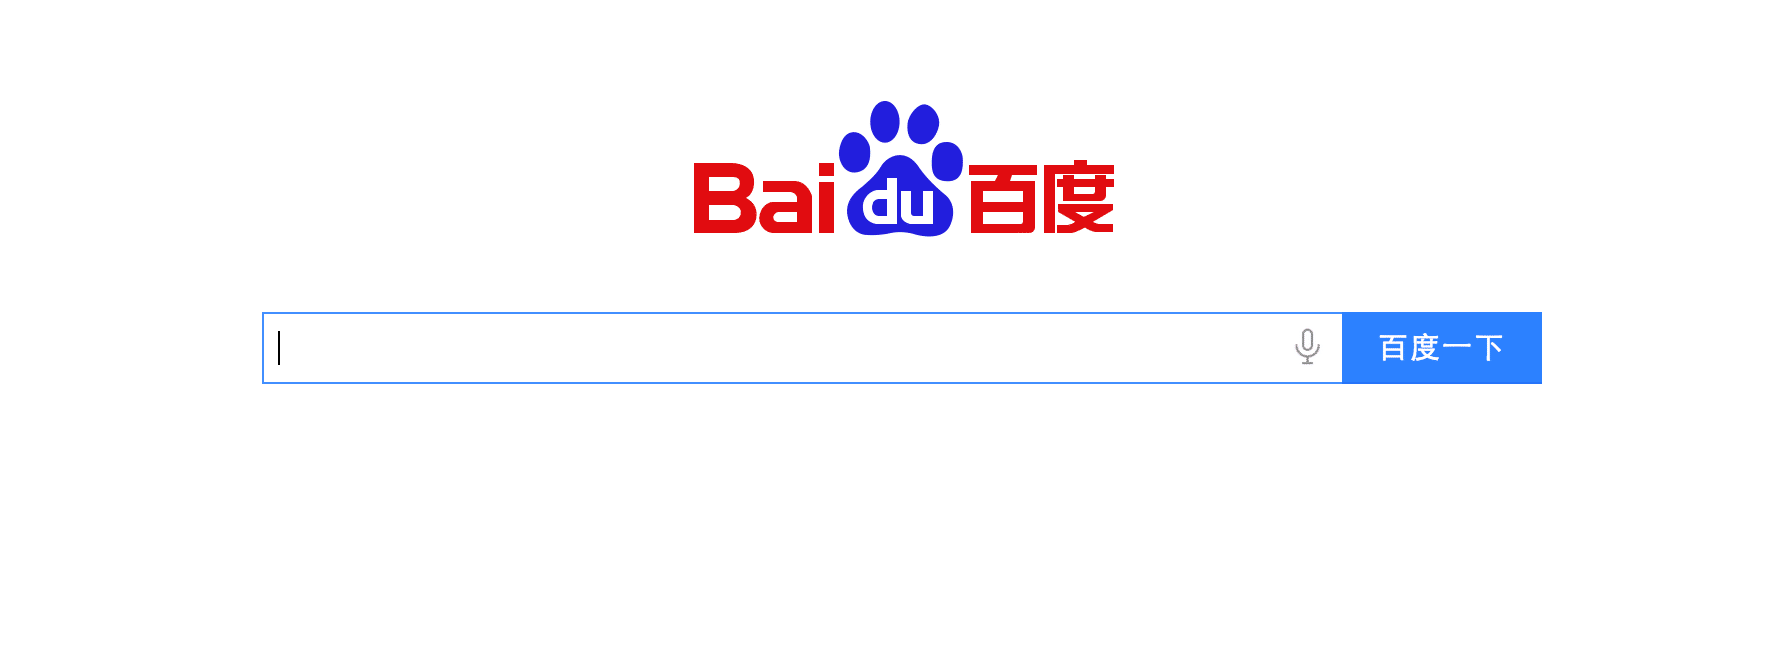 baidu-innovation-chinese-google-startup-tech-asia